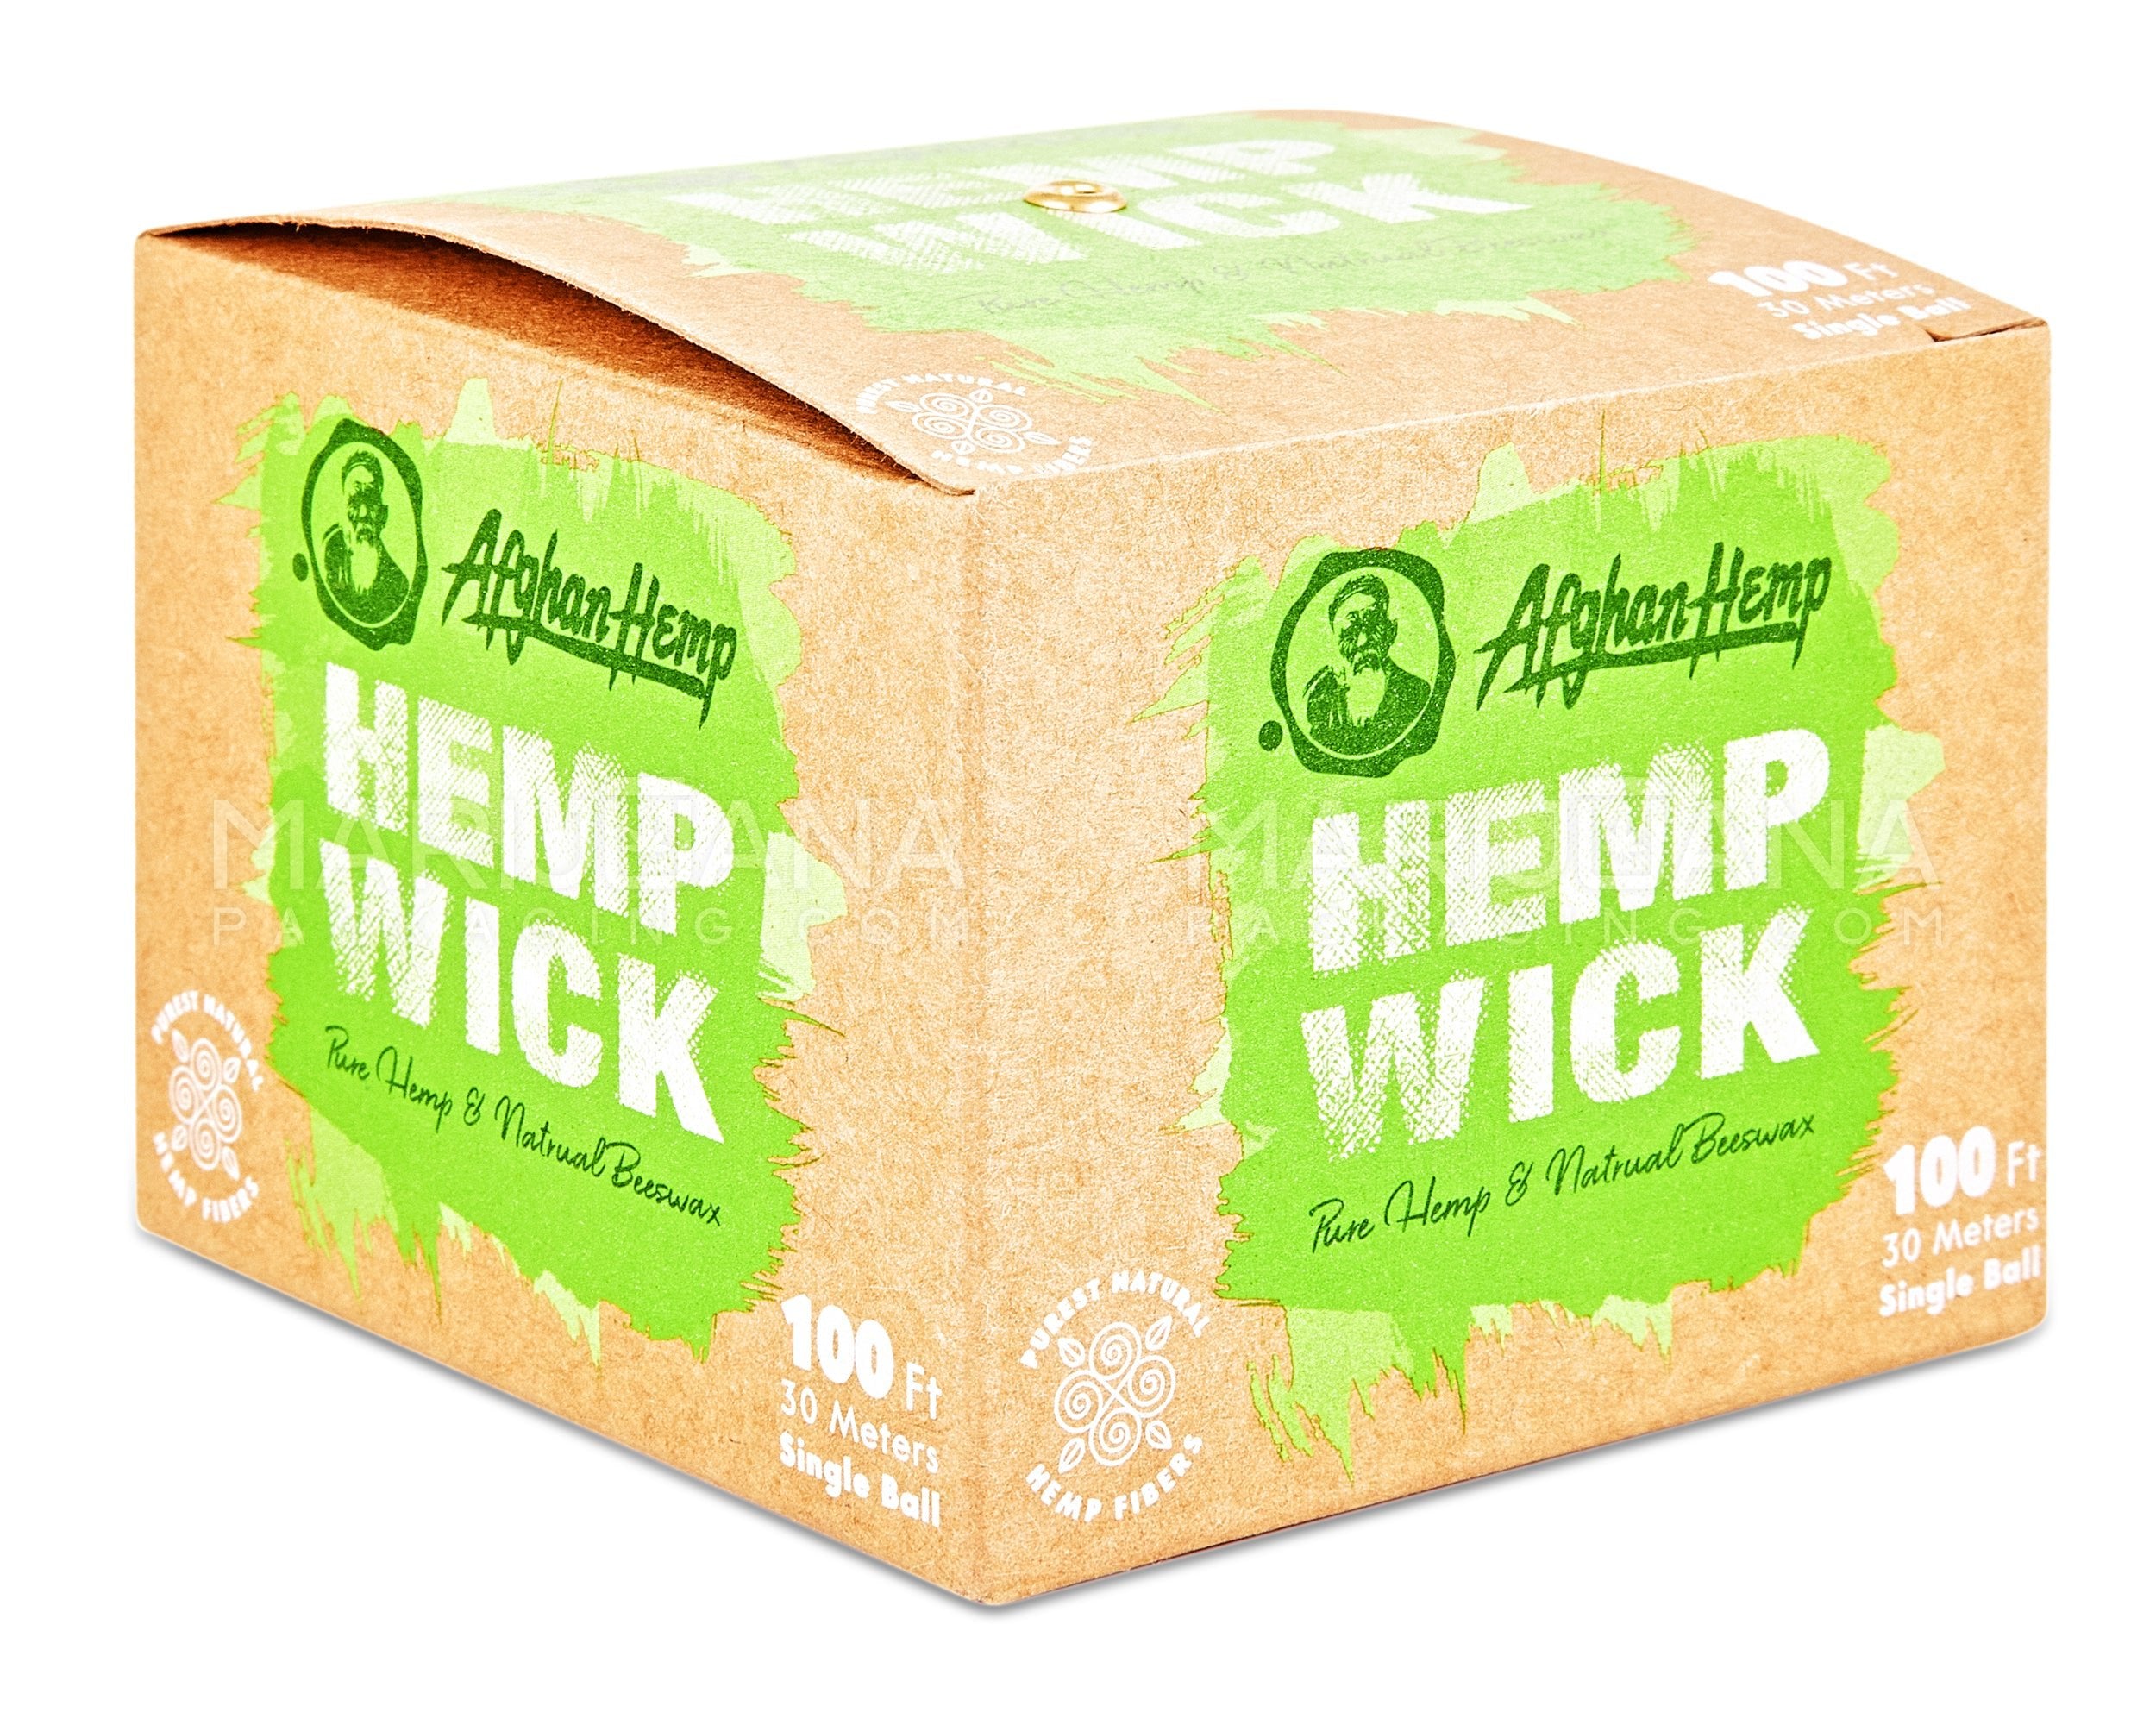 AFGHAN HEMP | Hemp & Beeswax Wick | 100ft Long - All Natural - 4